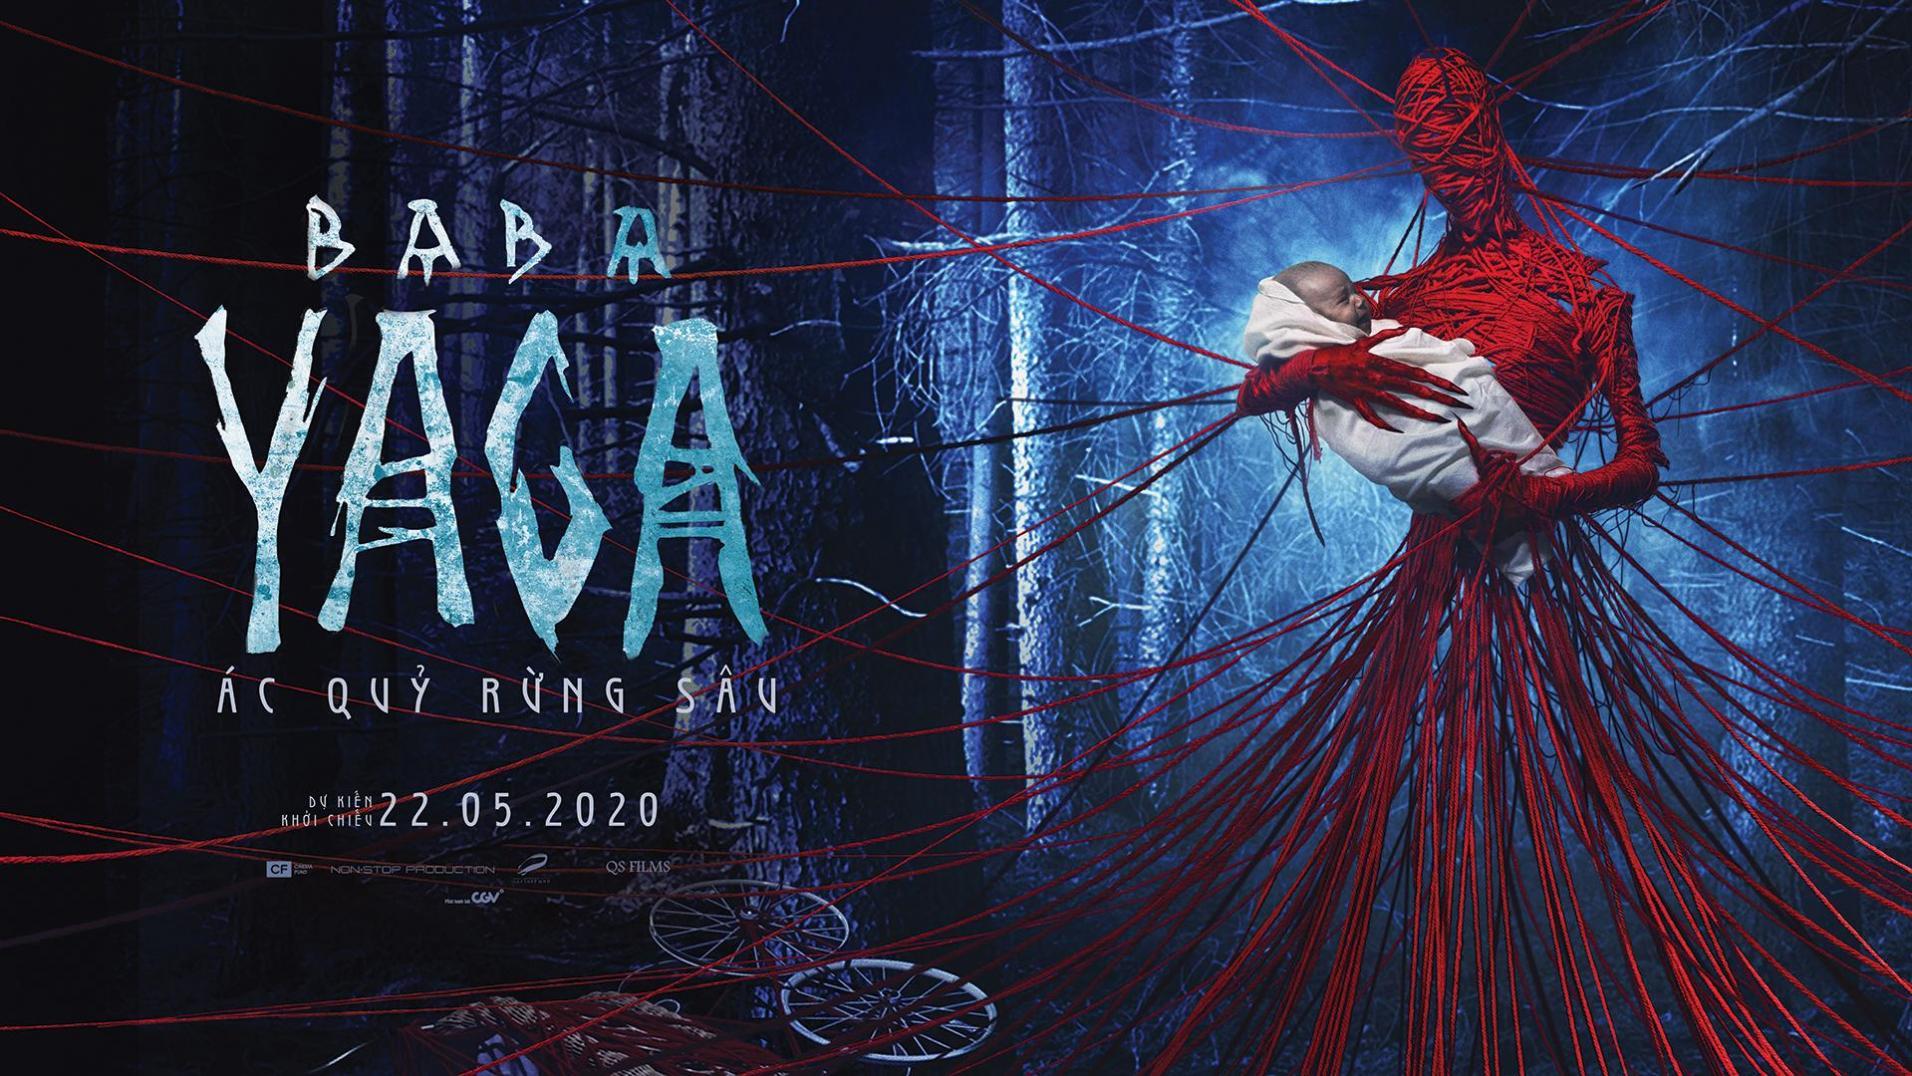 Review phim Baba Yaga: Ác Quỷ Rừng Sâu (Yaga: Terror of the Dark Forest)